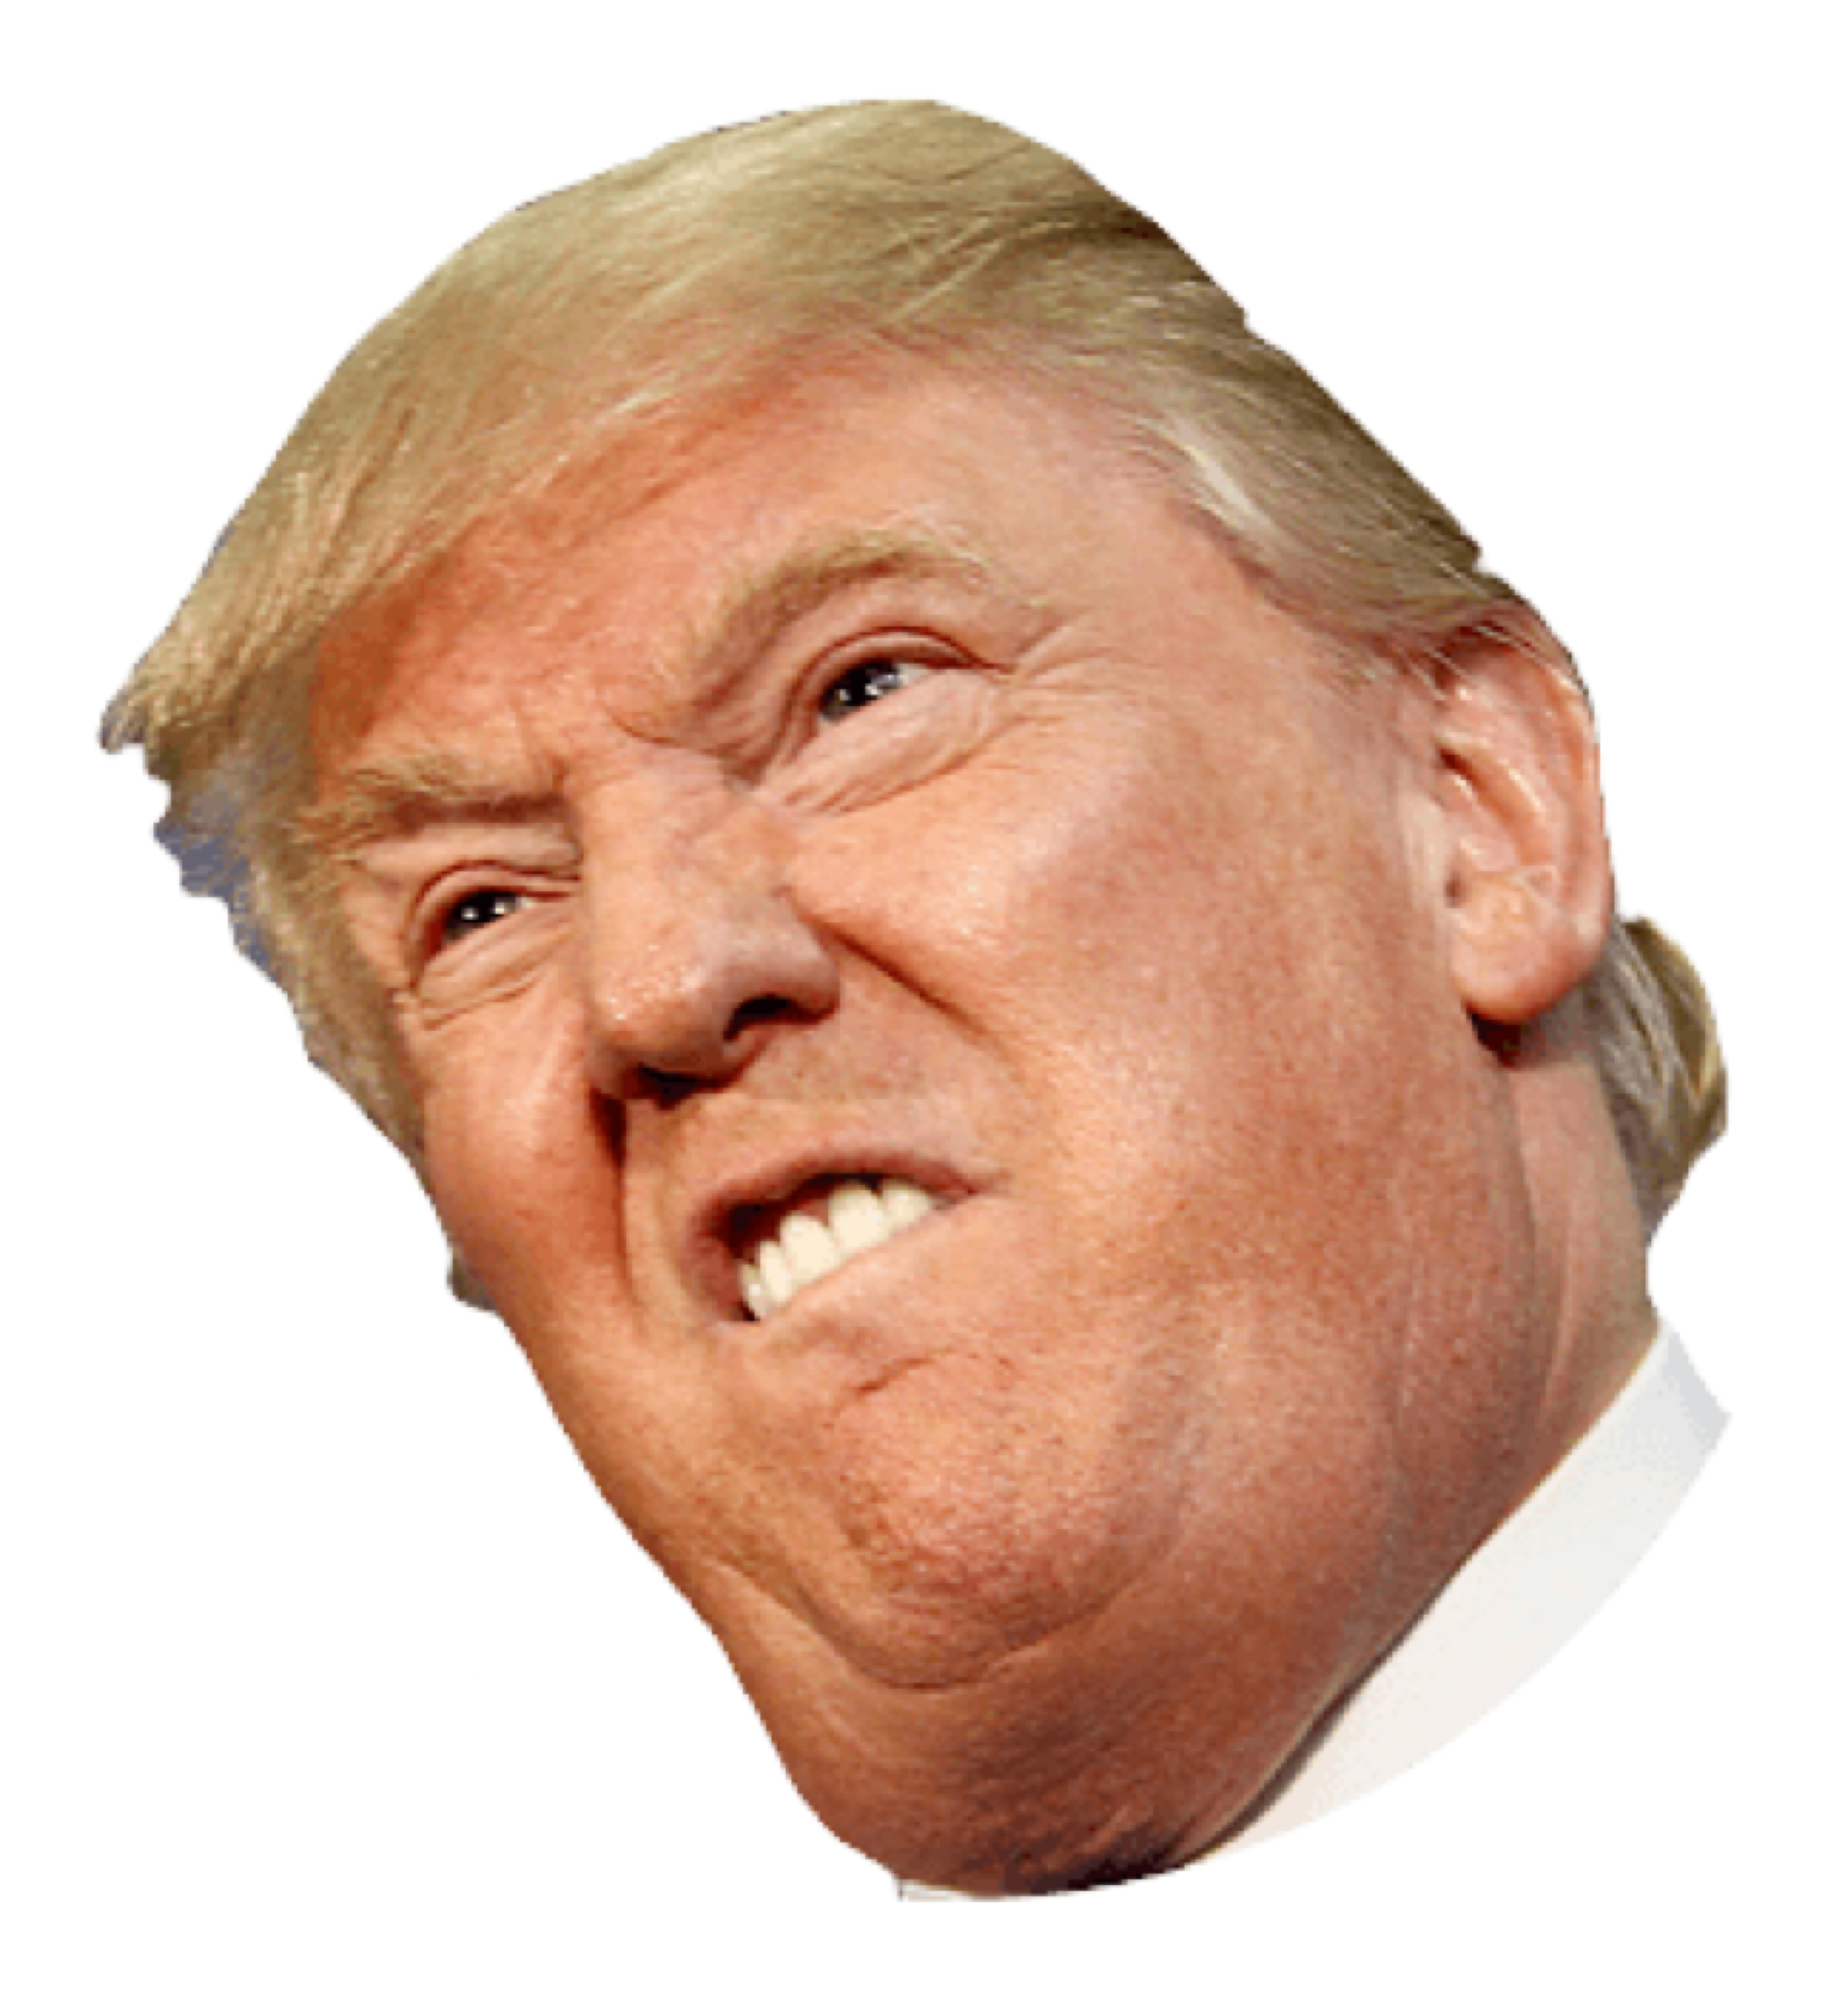 Trump dick face picture